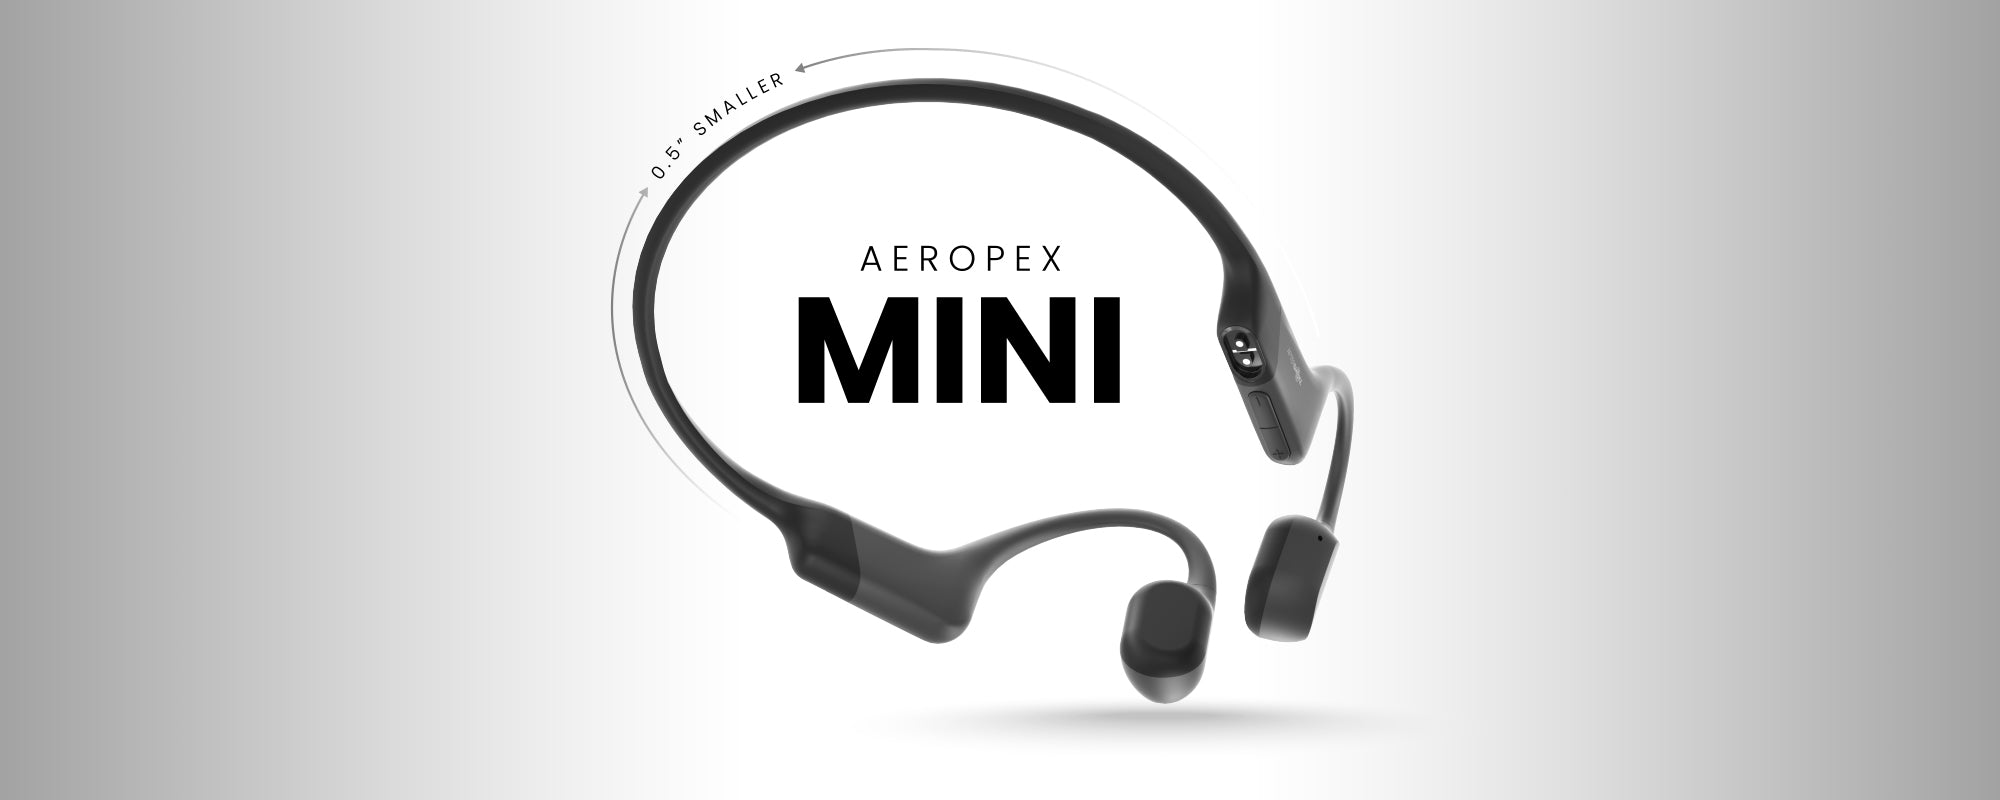 Image of AfterShokz Aeropex Mini wireless bone conduction headphones